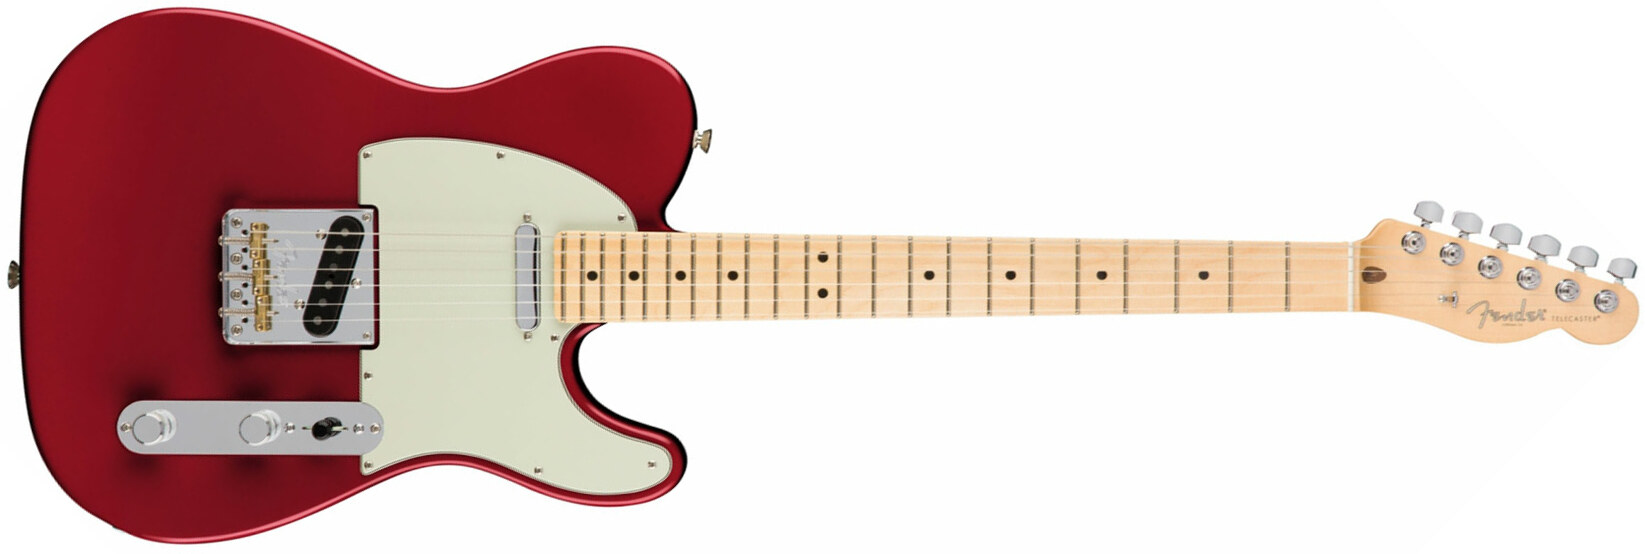 Fender Tele American Professional 2s Usa Mn - Candy Apple Red - E-Gitarre in Teleform - Main picture